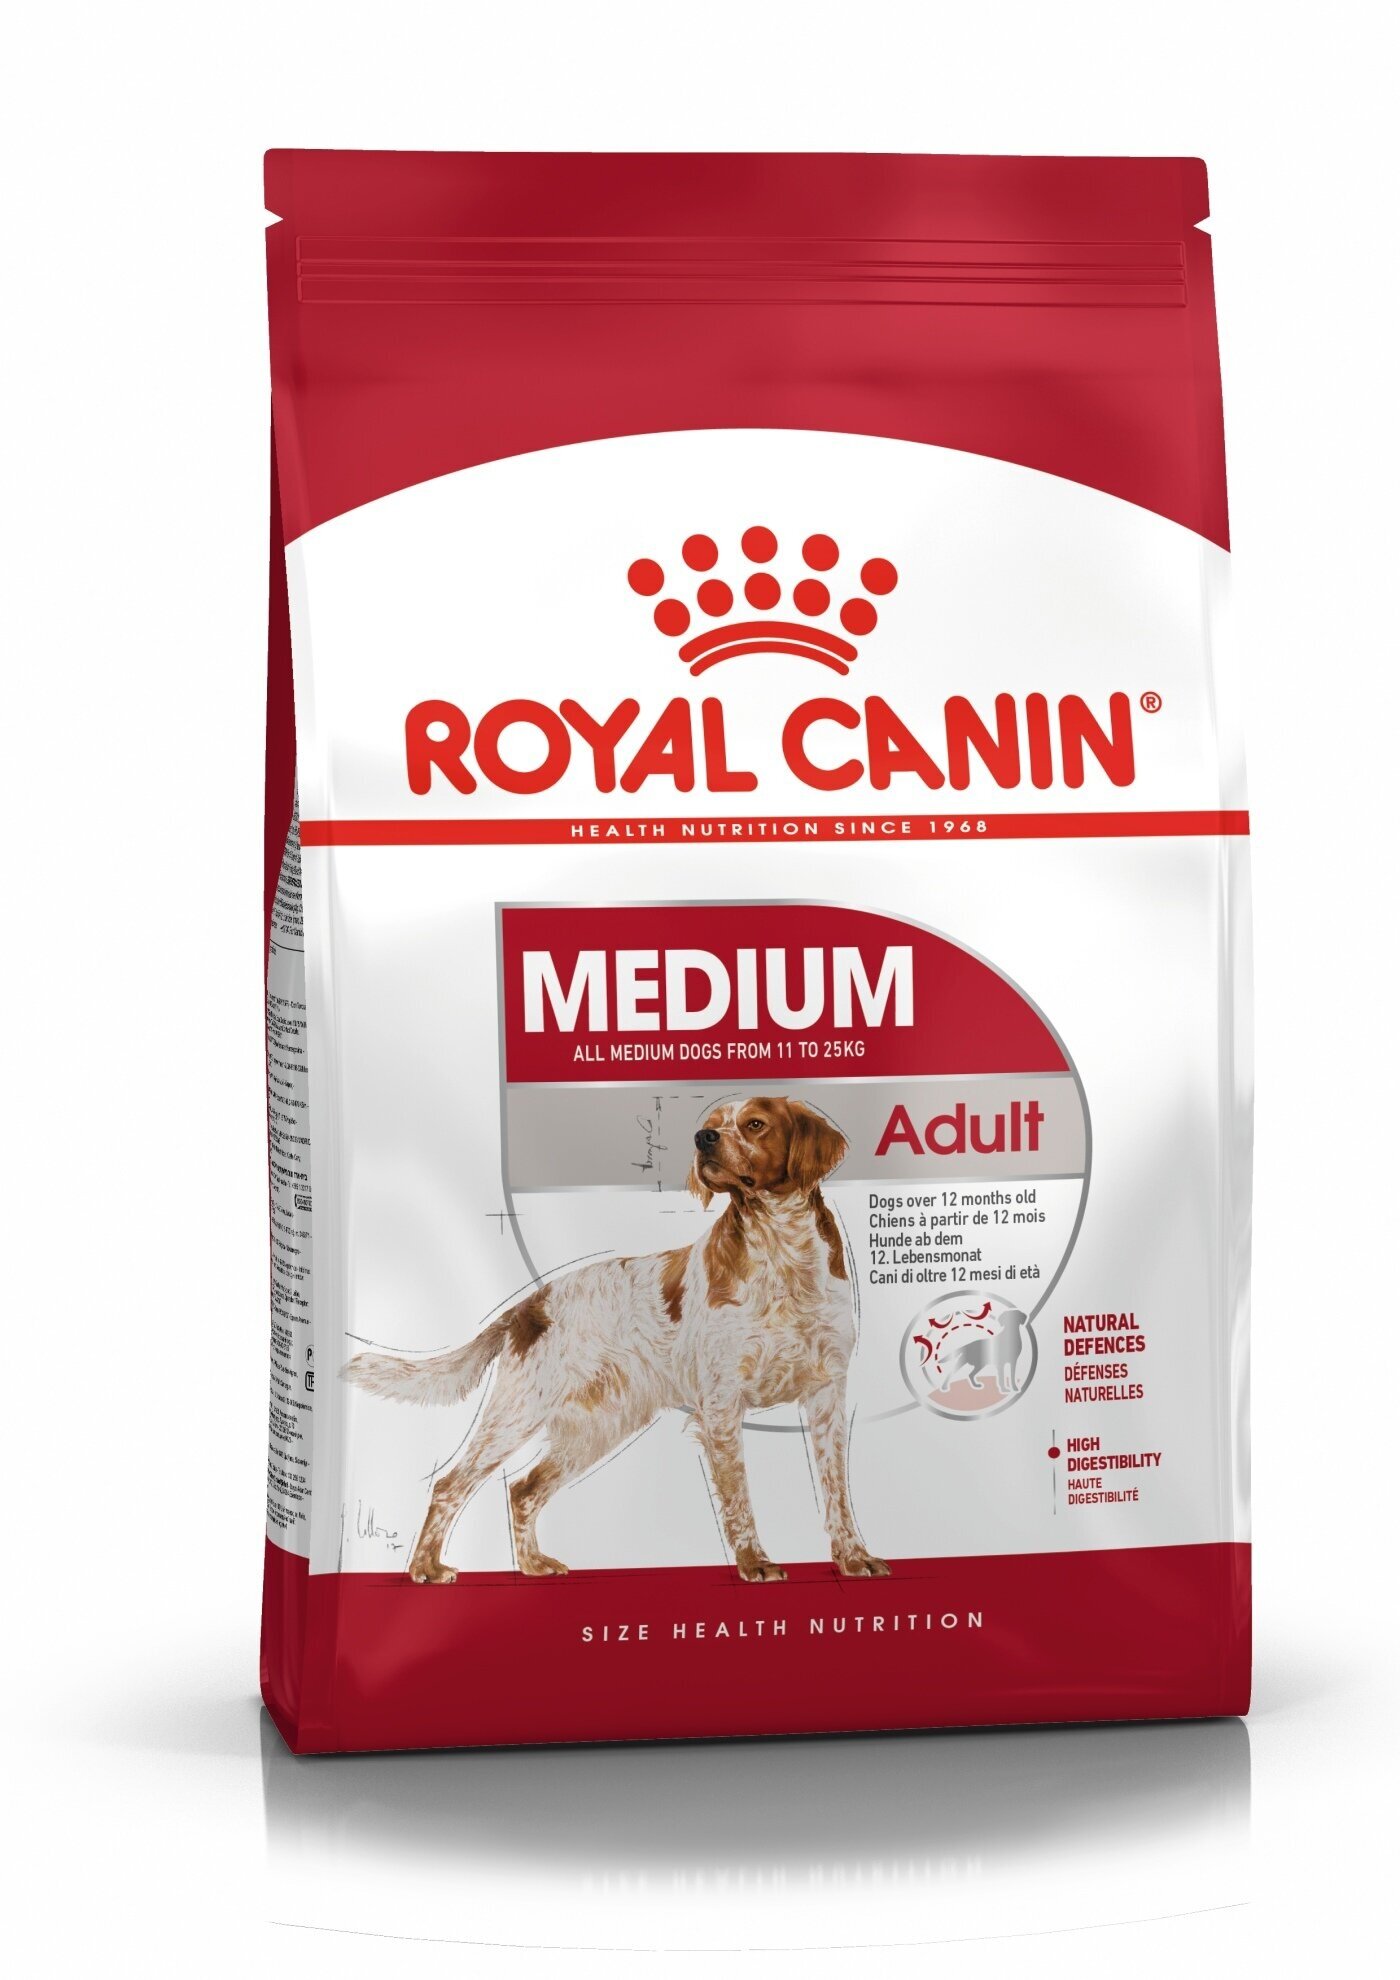 Сухой корм для собак Royal Canin Medium Adult 20кг